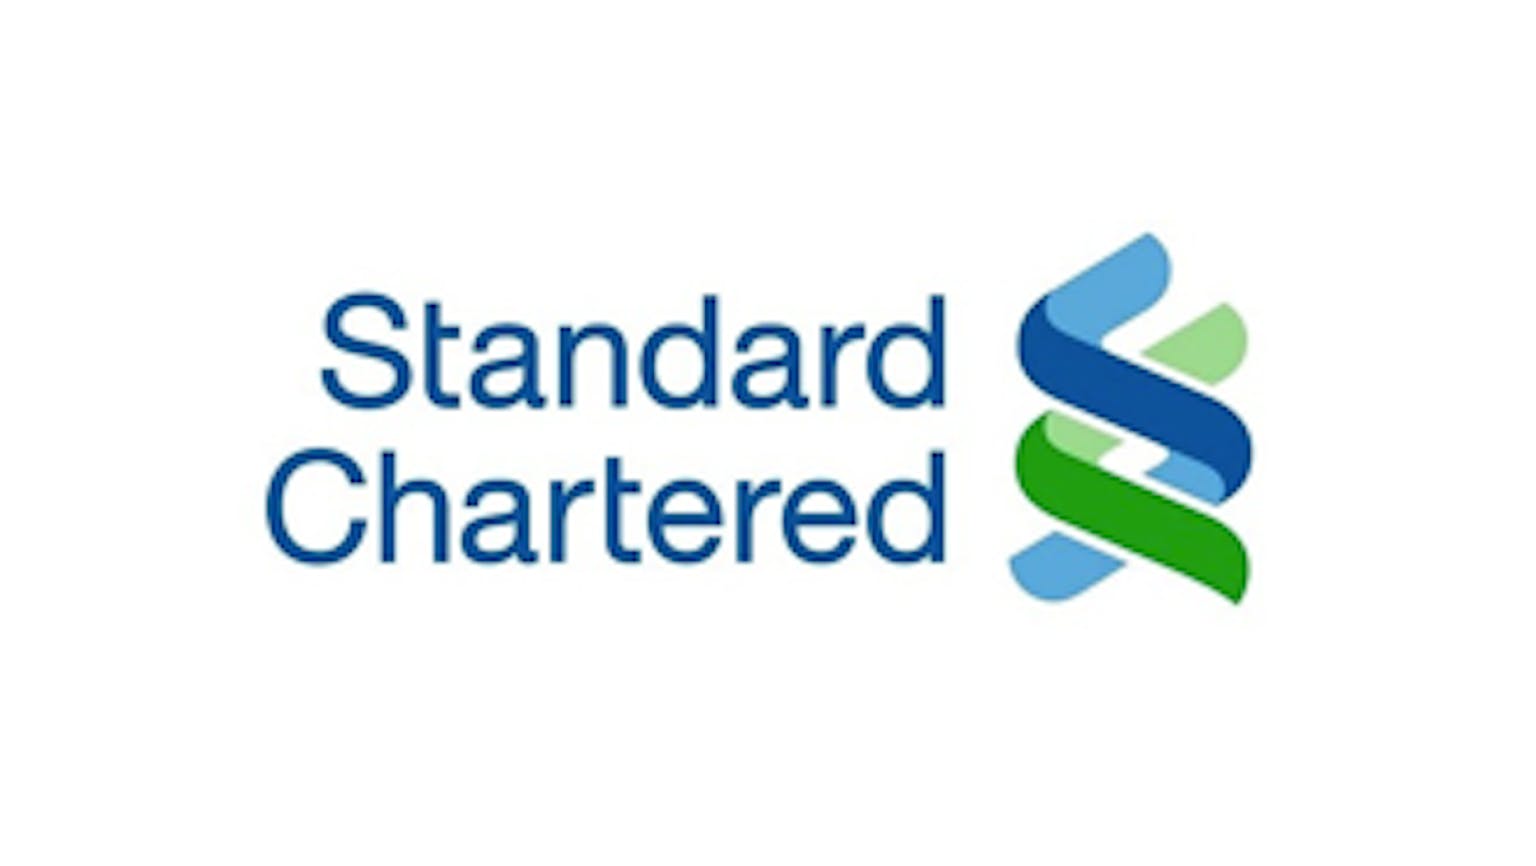 Standard Chartered Bank Singapore